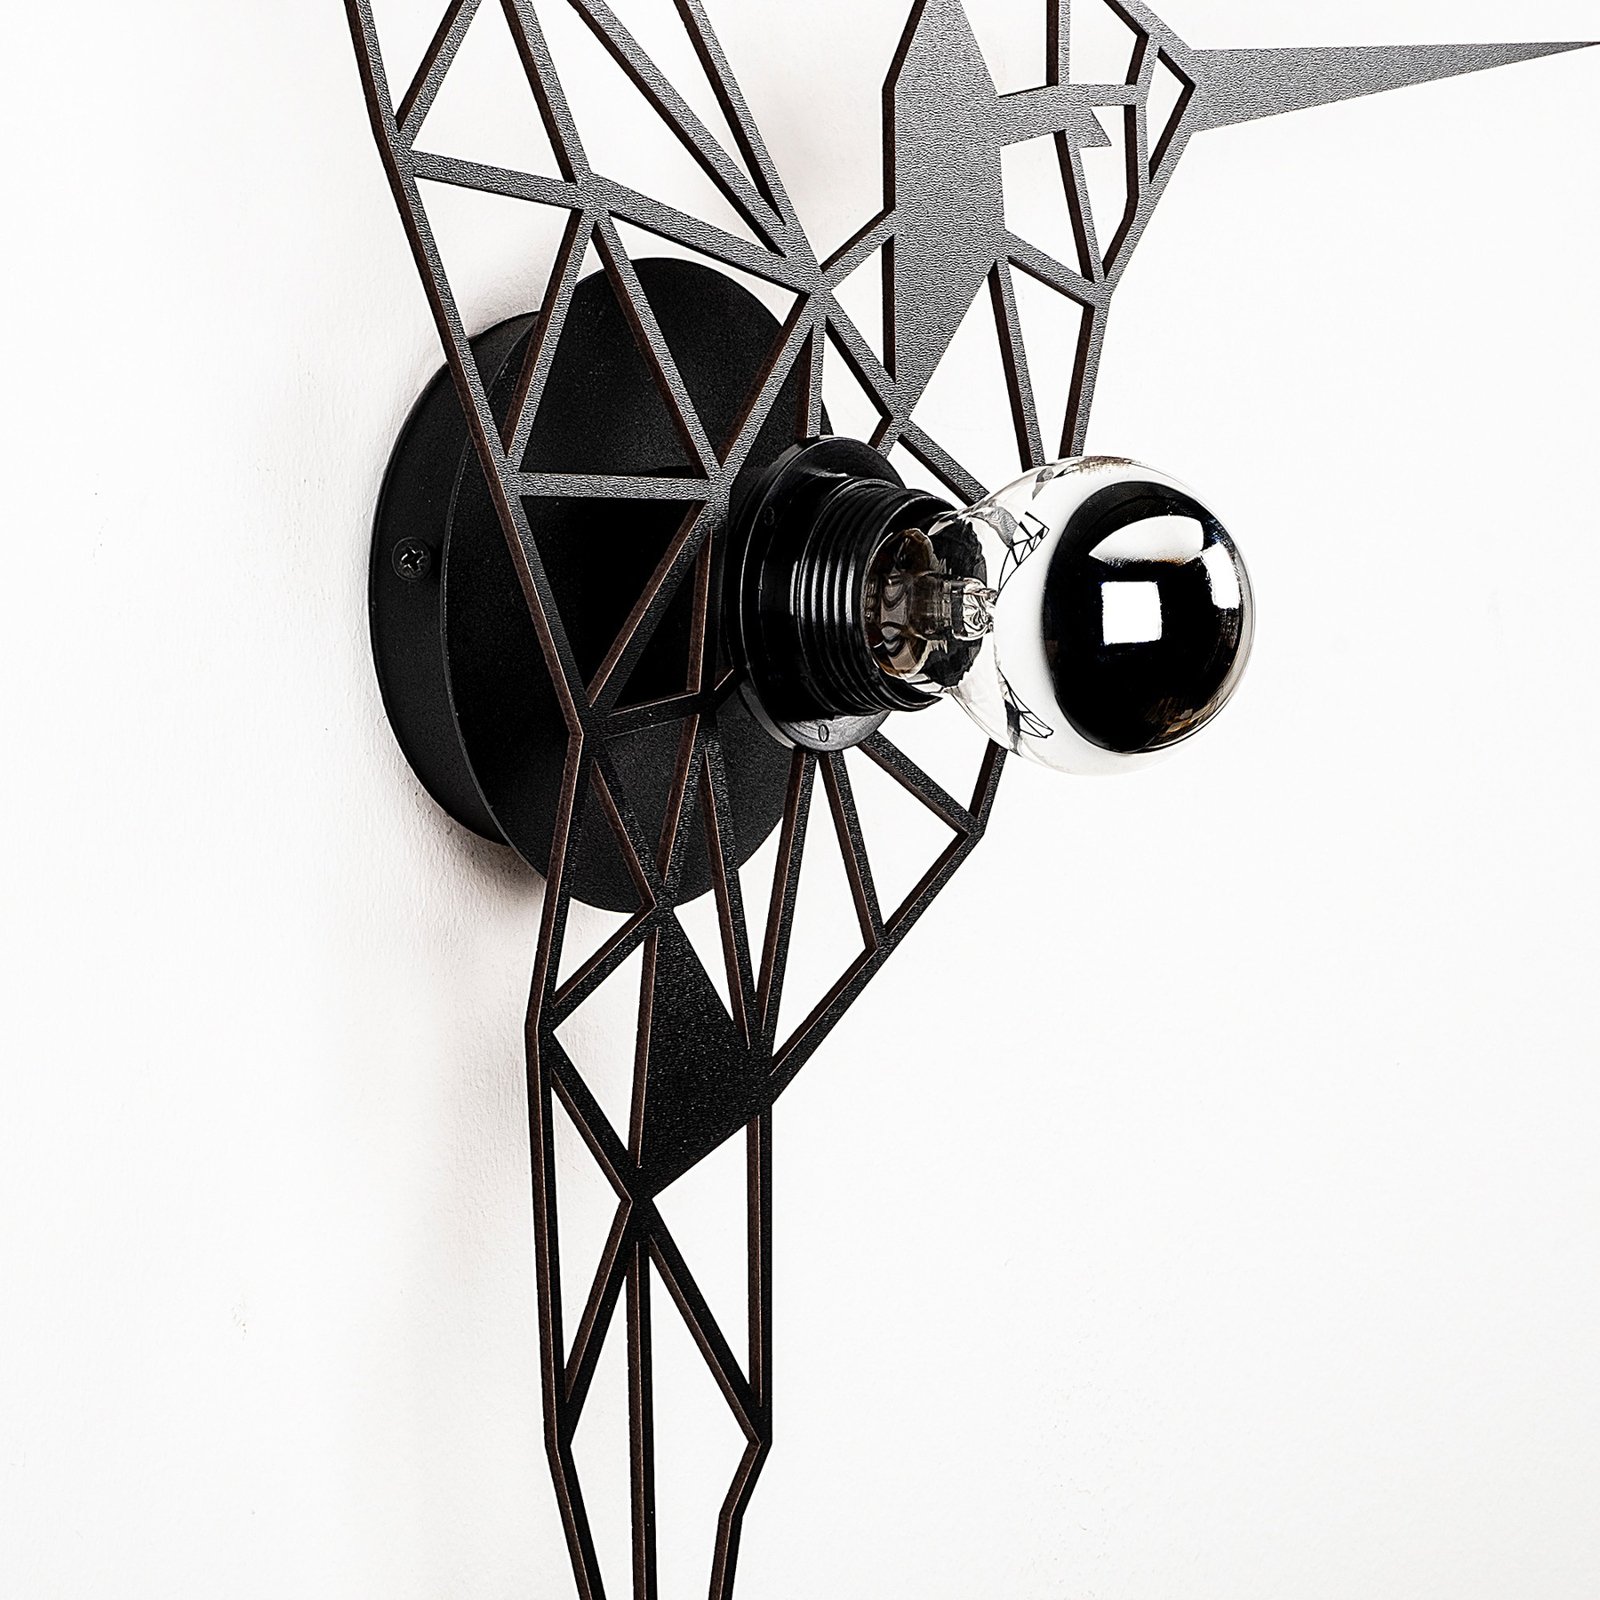 Wandlamp W-053 lasercut, zwart vogeldesign